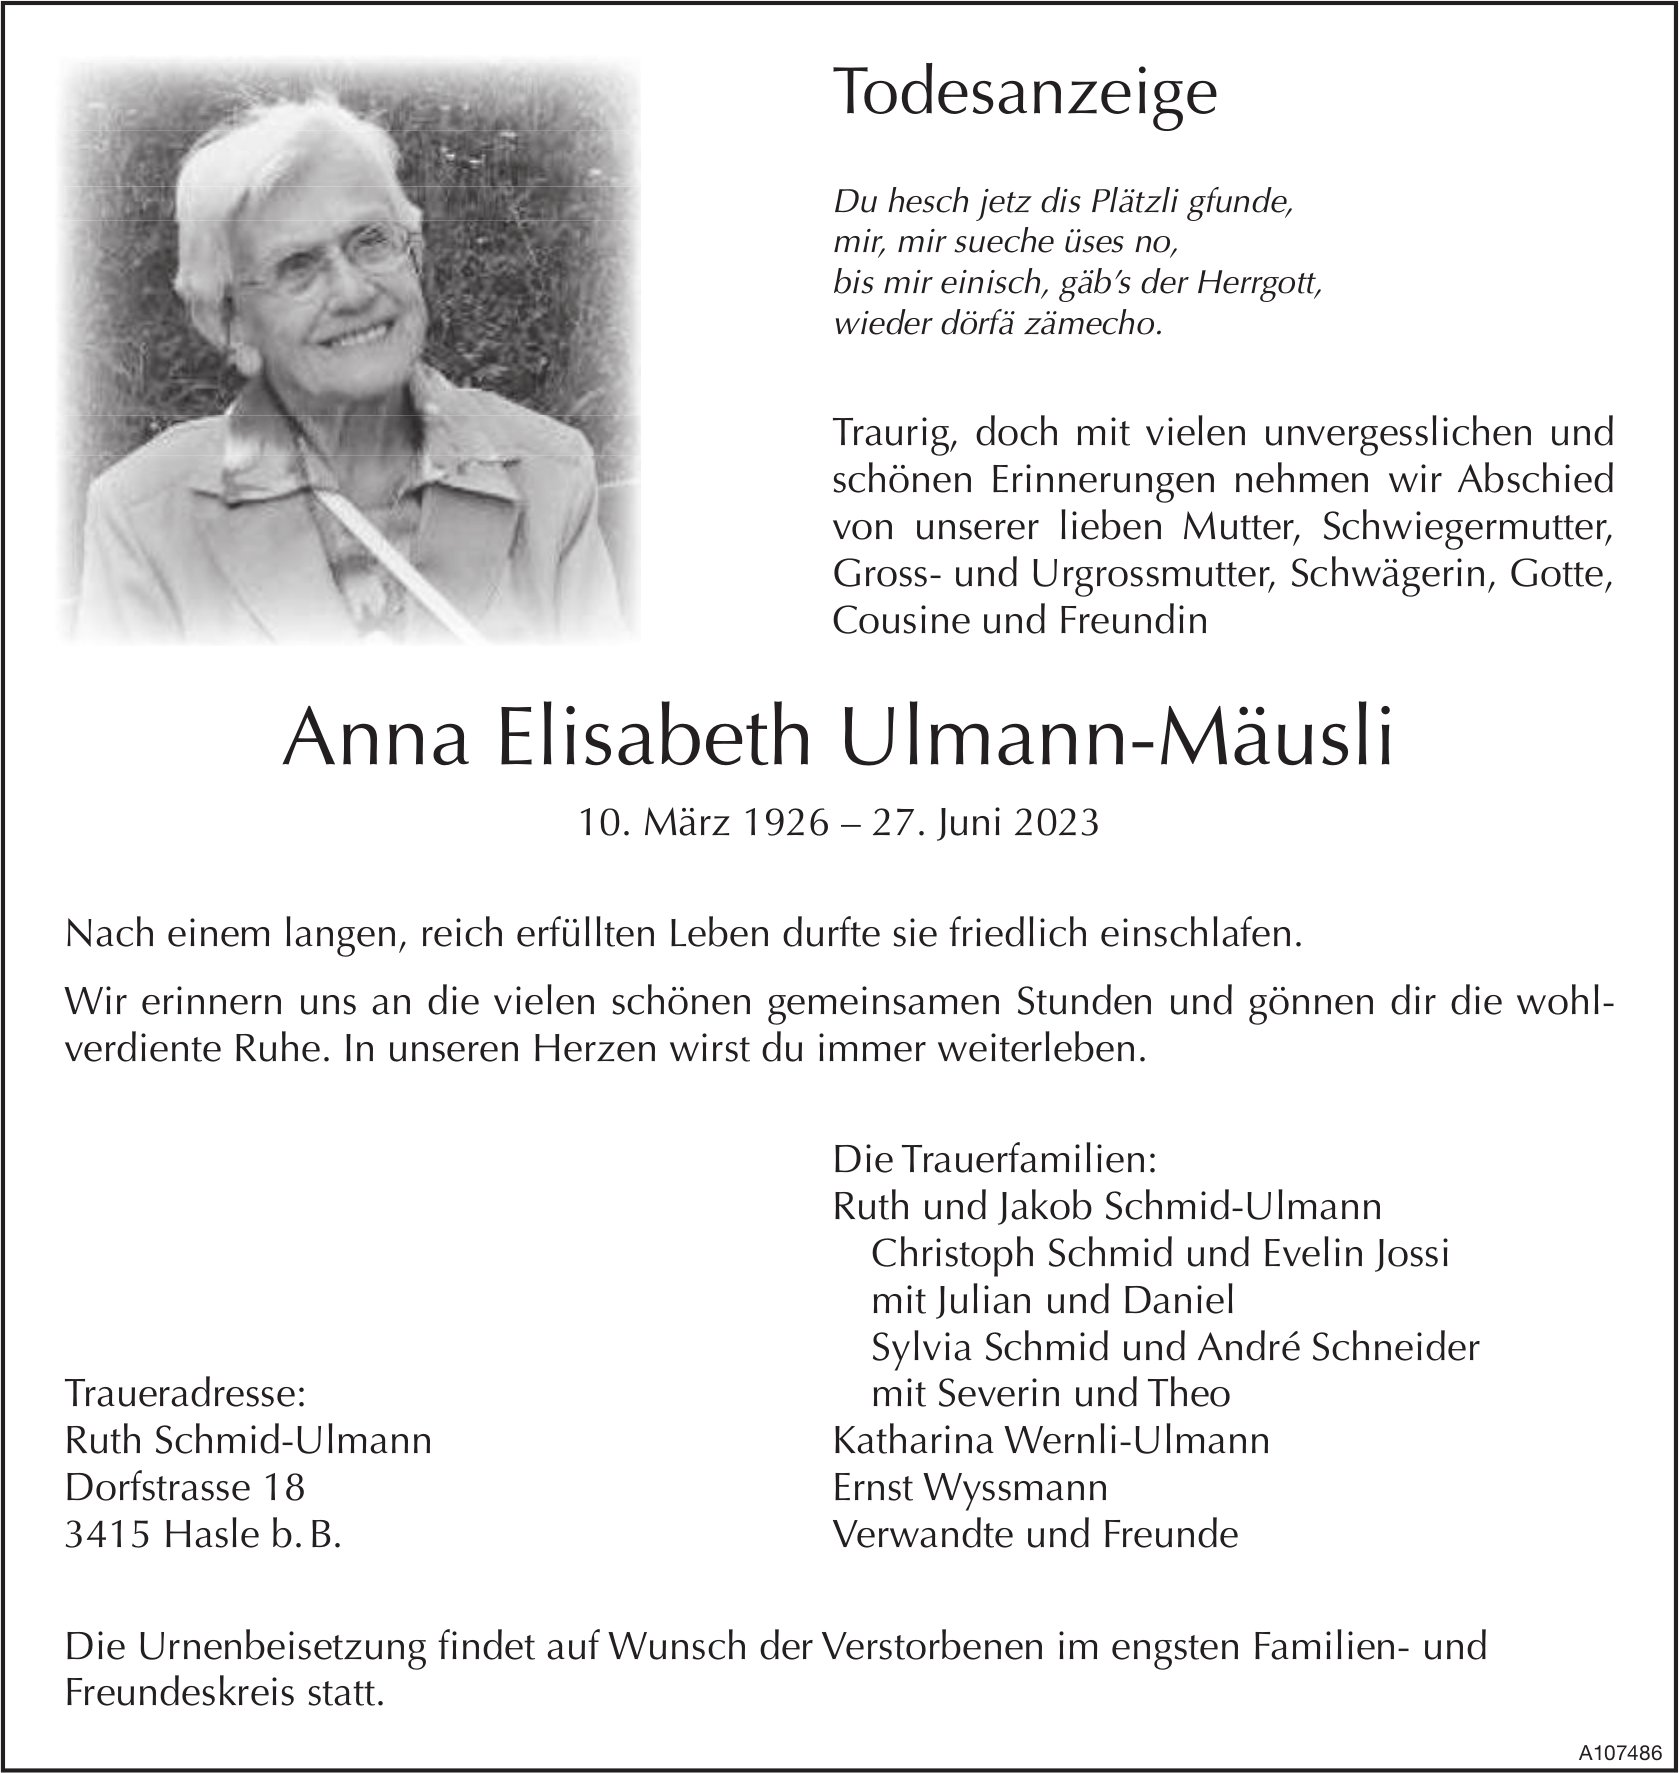 Anna Elisabeth Ulmann-Mäusli, Juni 2023 / TA